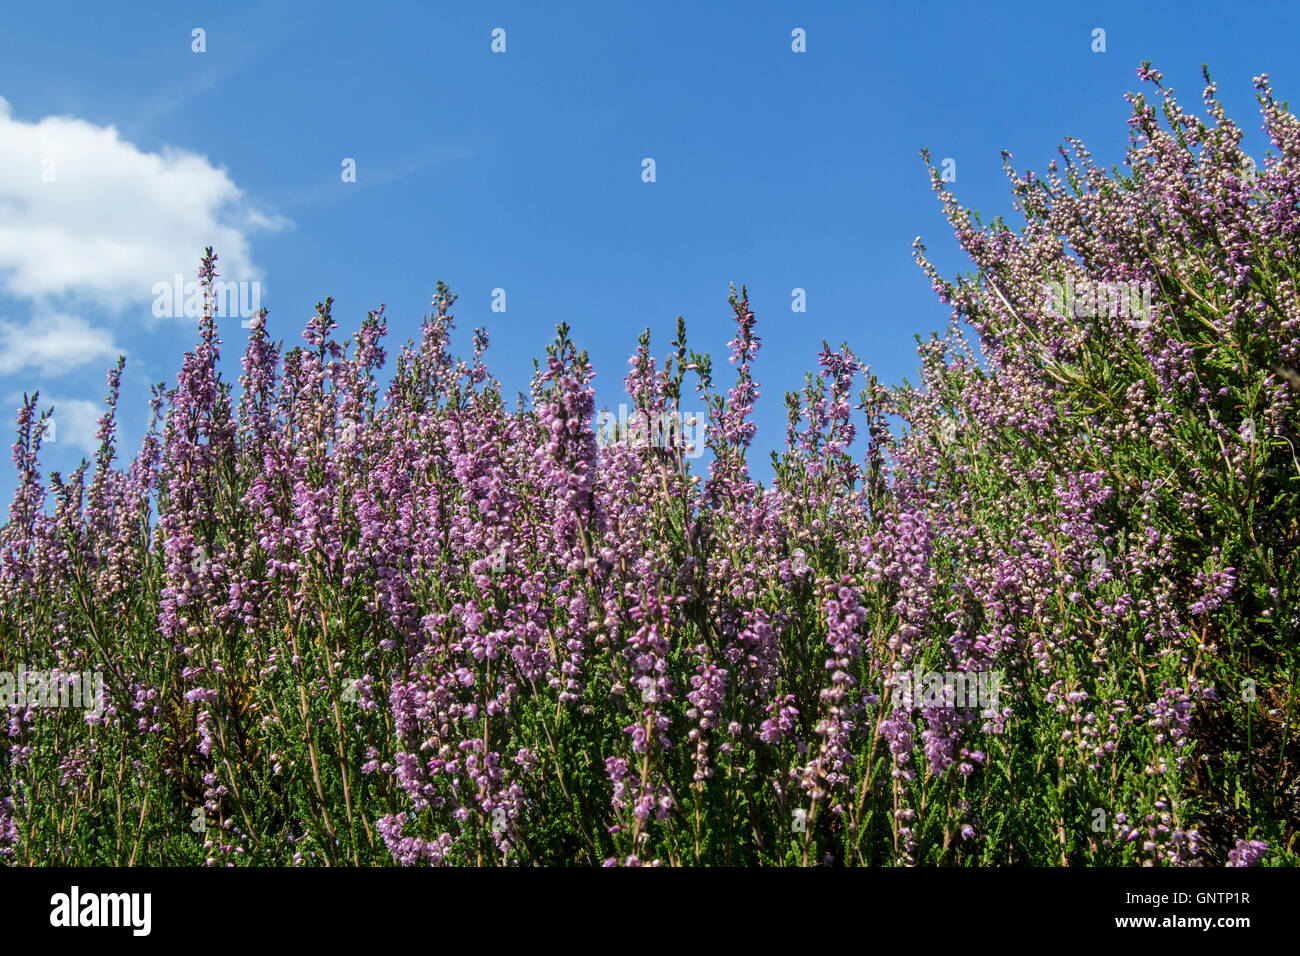 Worm's eye view of common heather / Scotch heather / ling (Calluna vulgaris) flowering in heathland in summer Stock Photo